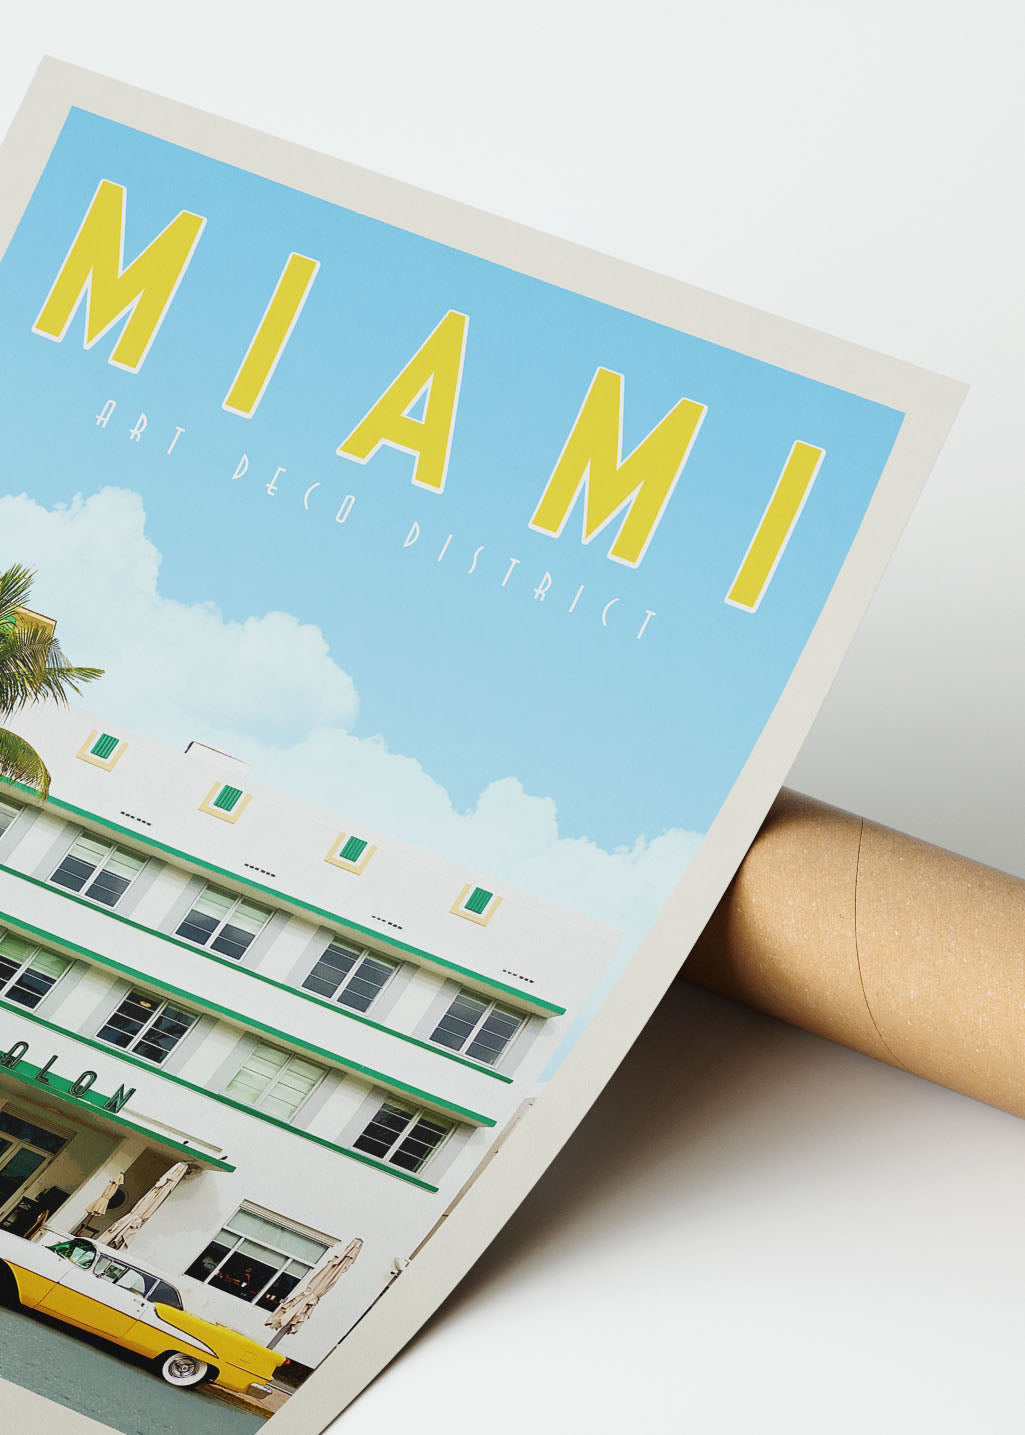 Miami, Florida - Vintage Travel Print - Vintaprints